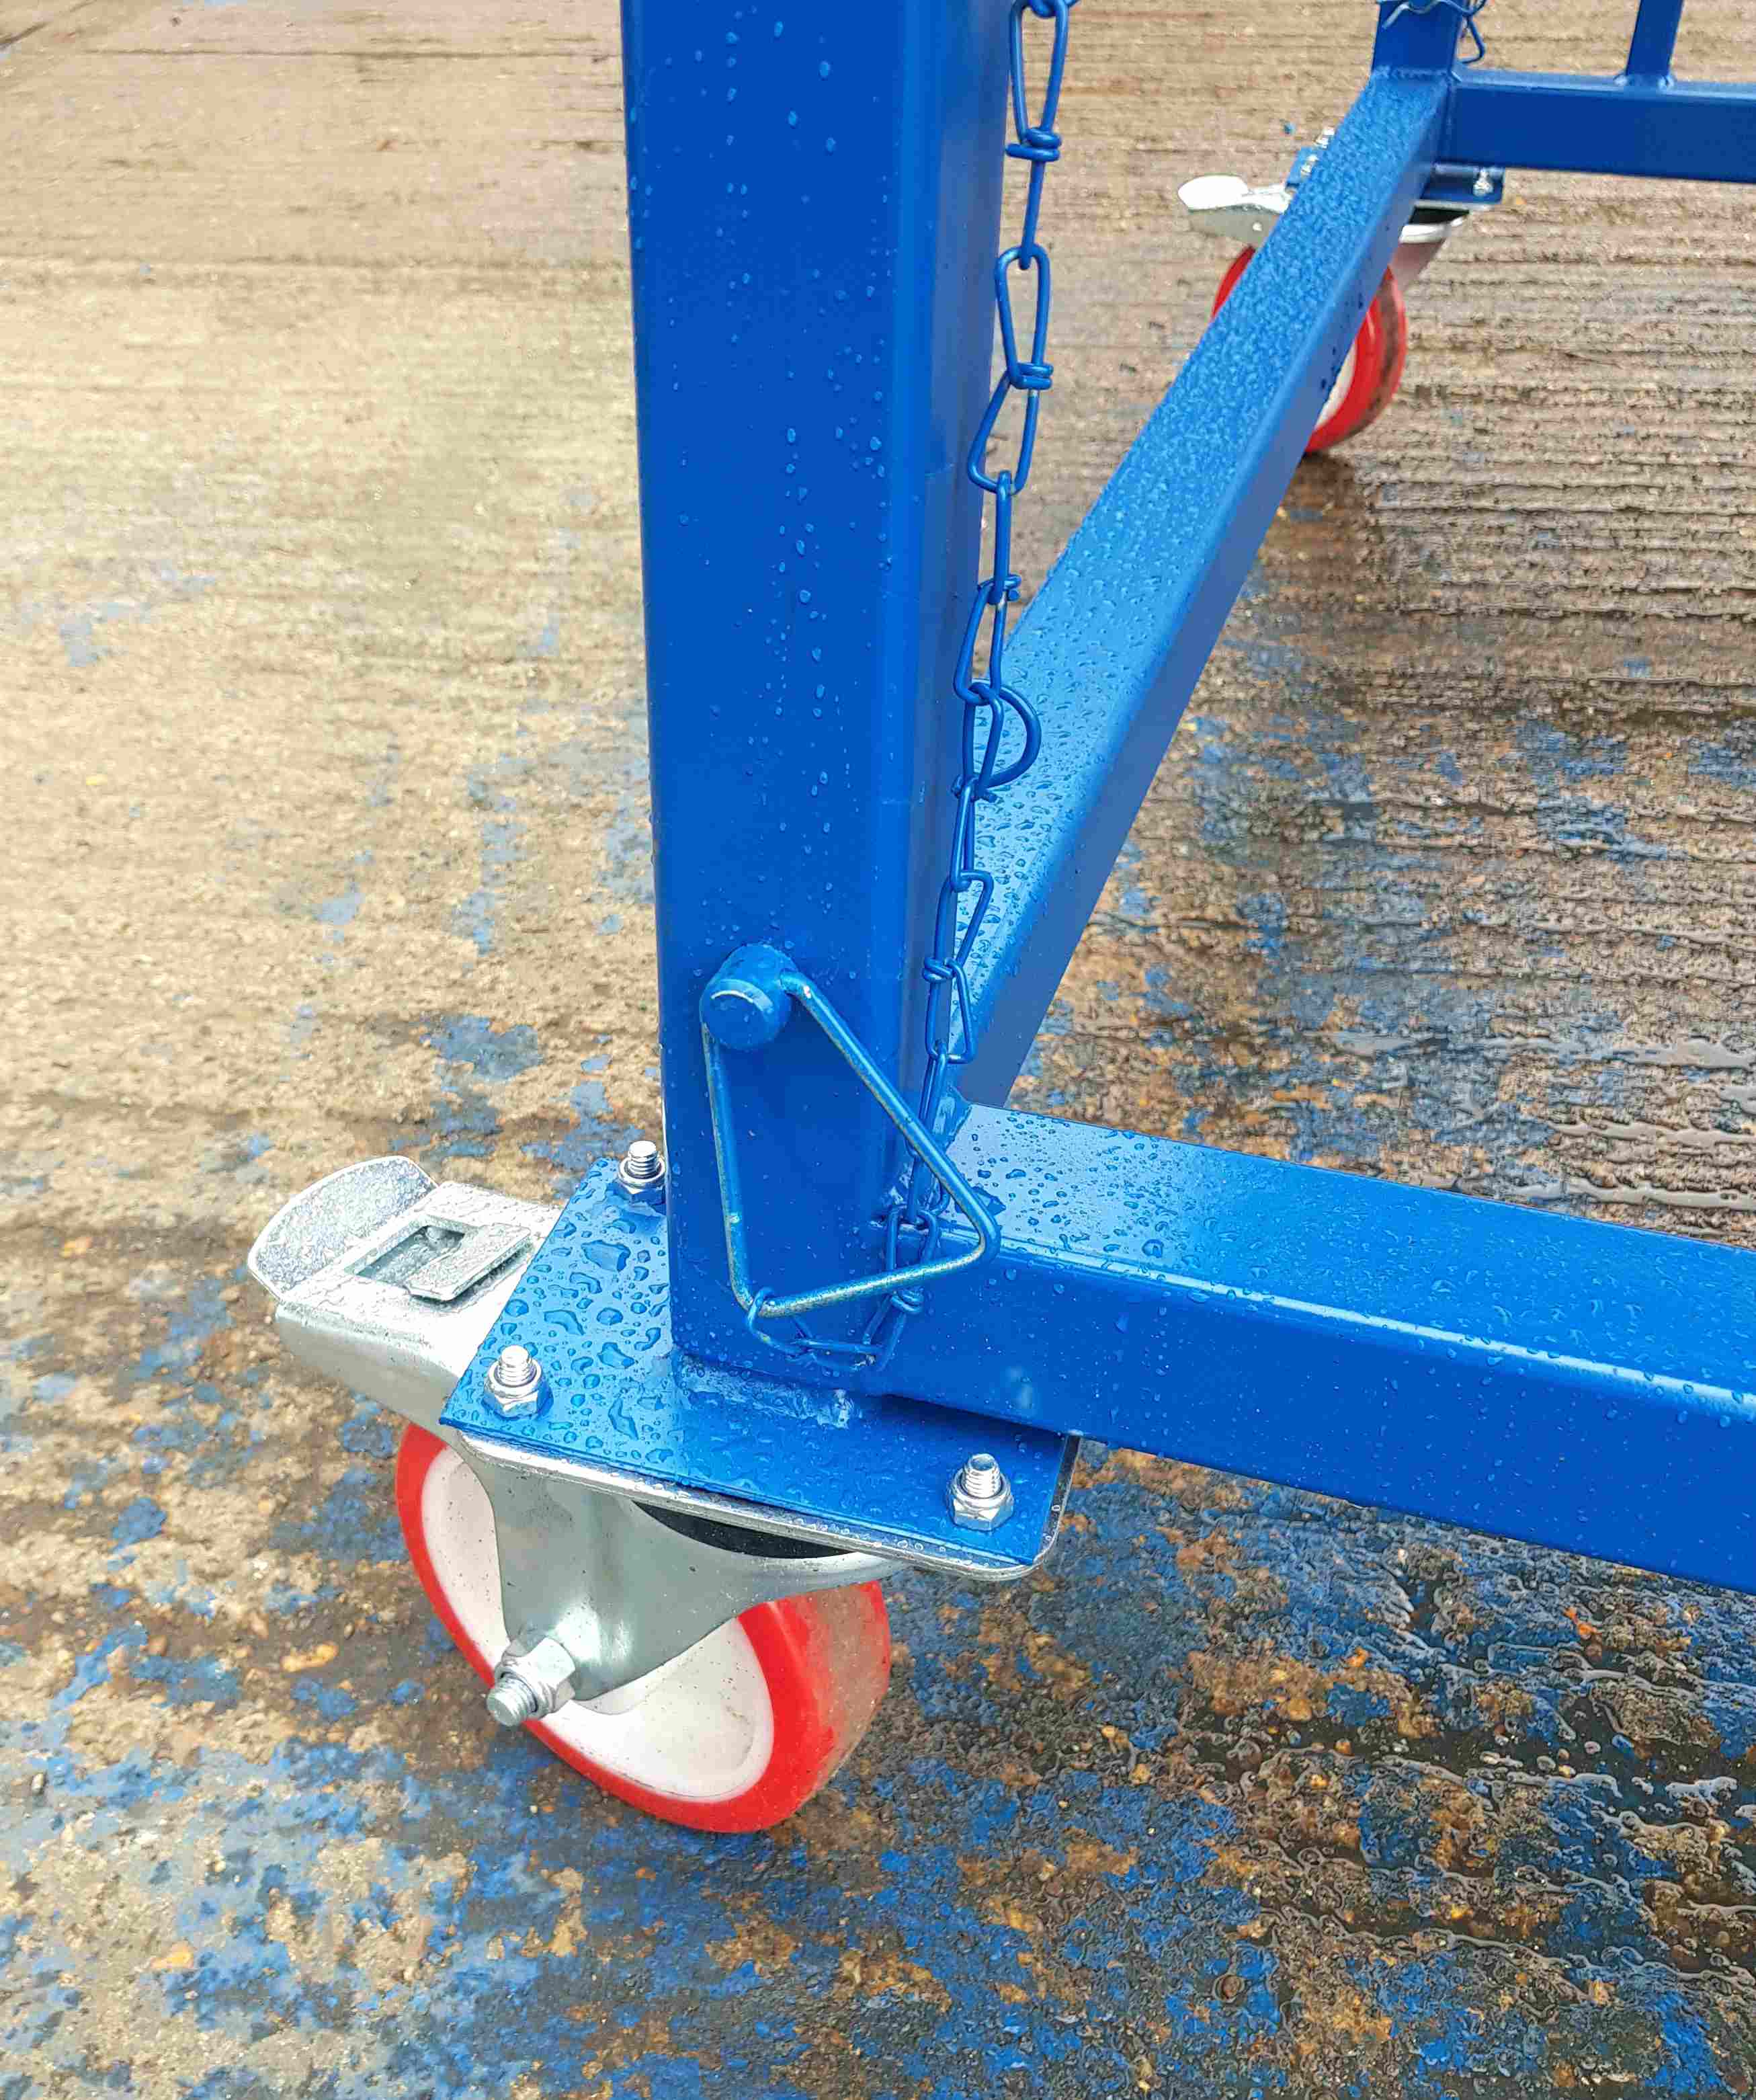 Adjustable height platform leg with pin adjustment